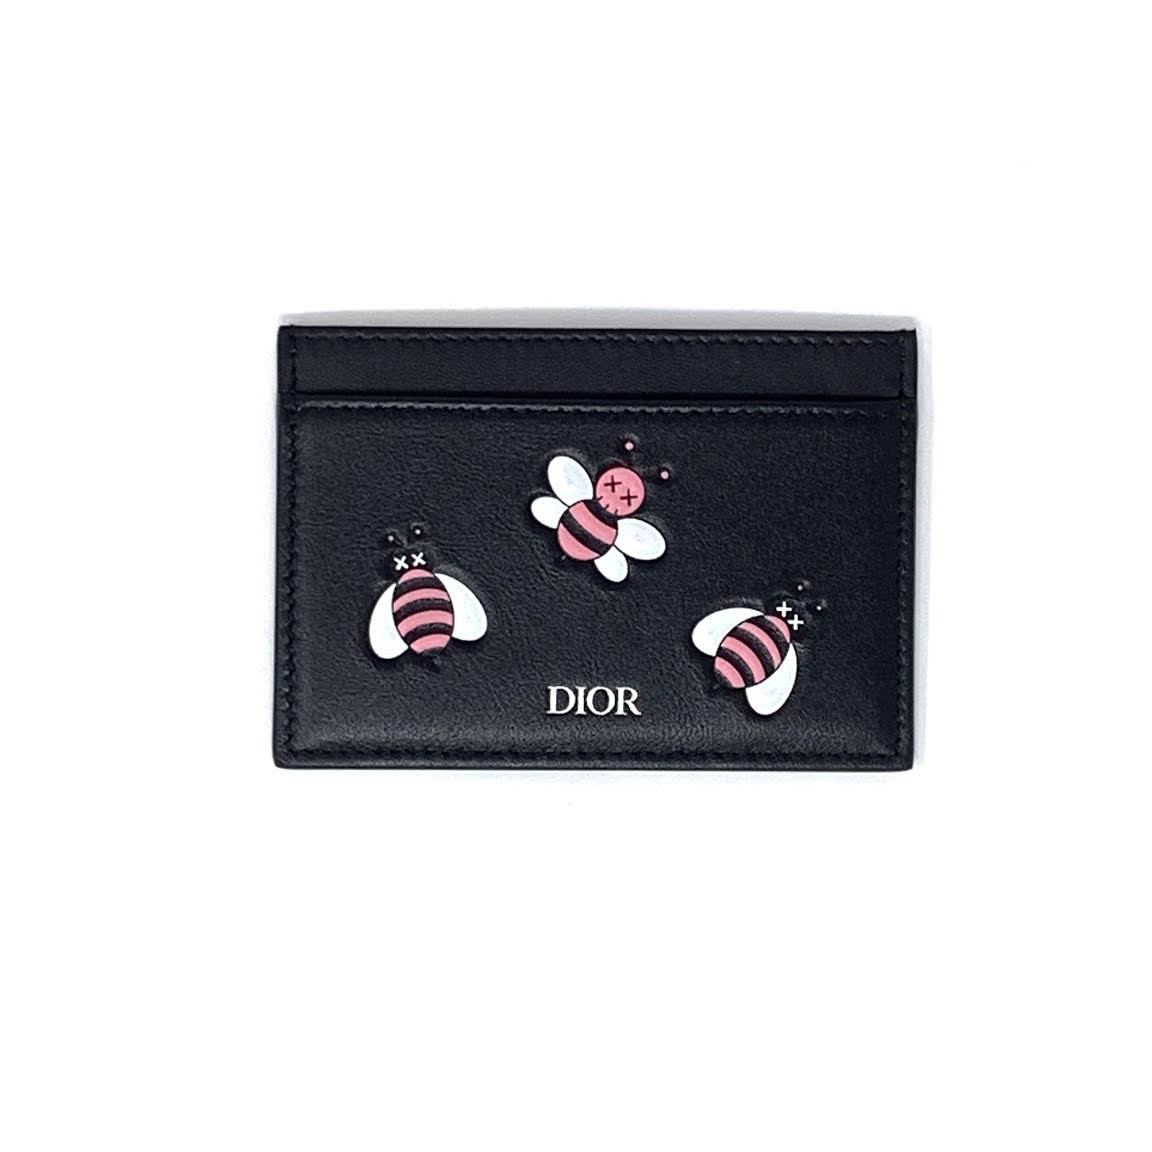 Dior X Kaws Card Holder w/ Pink Bees